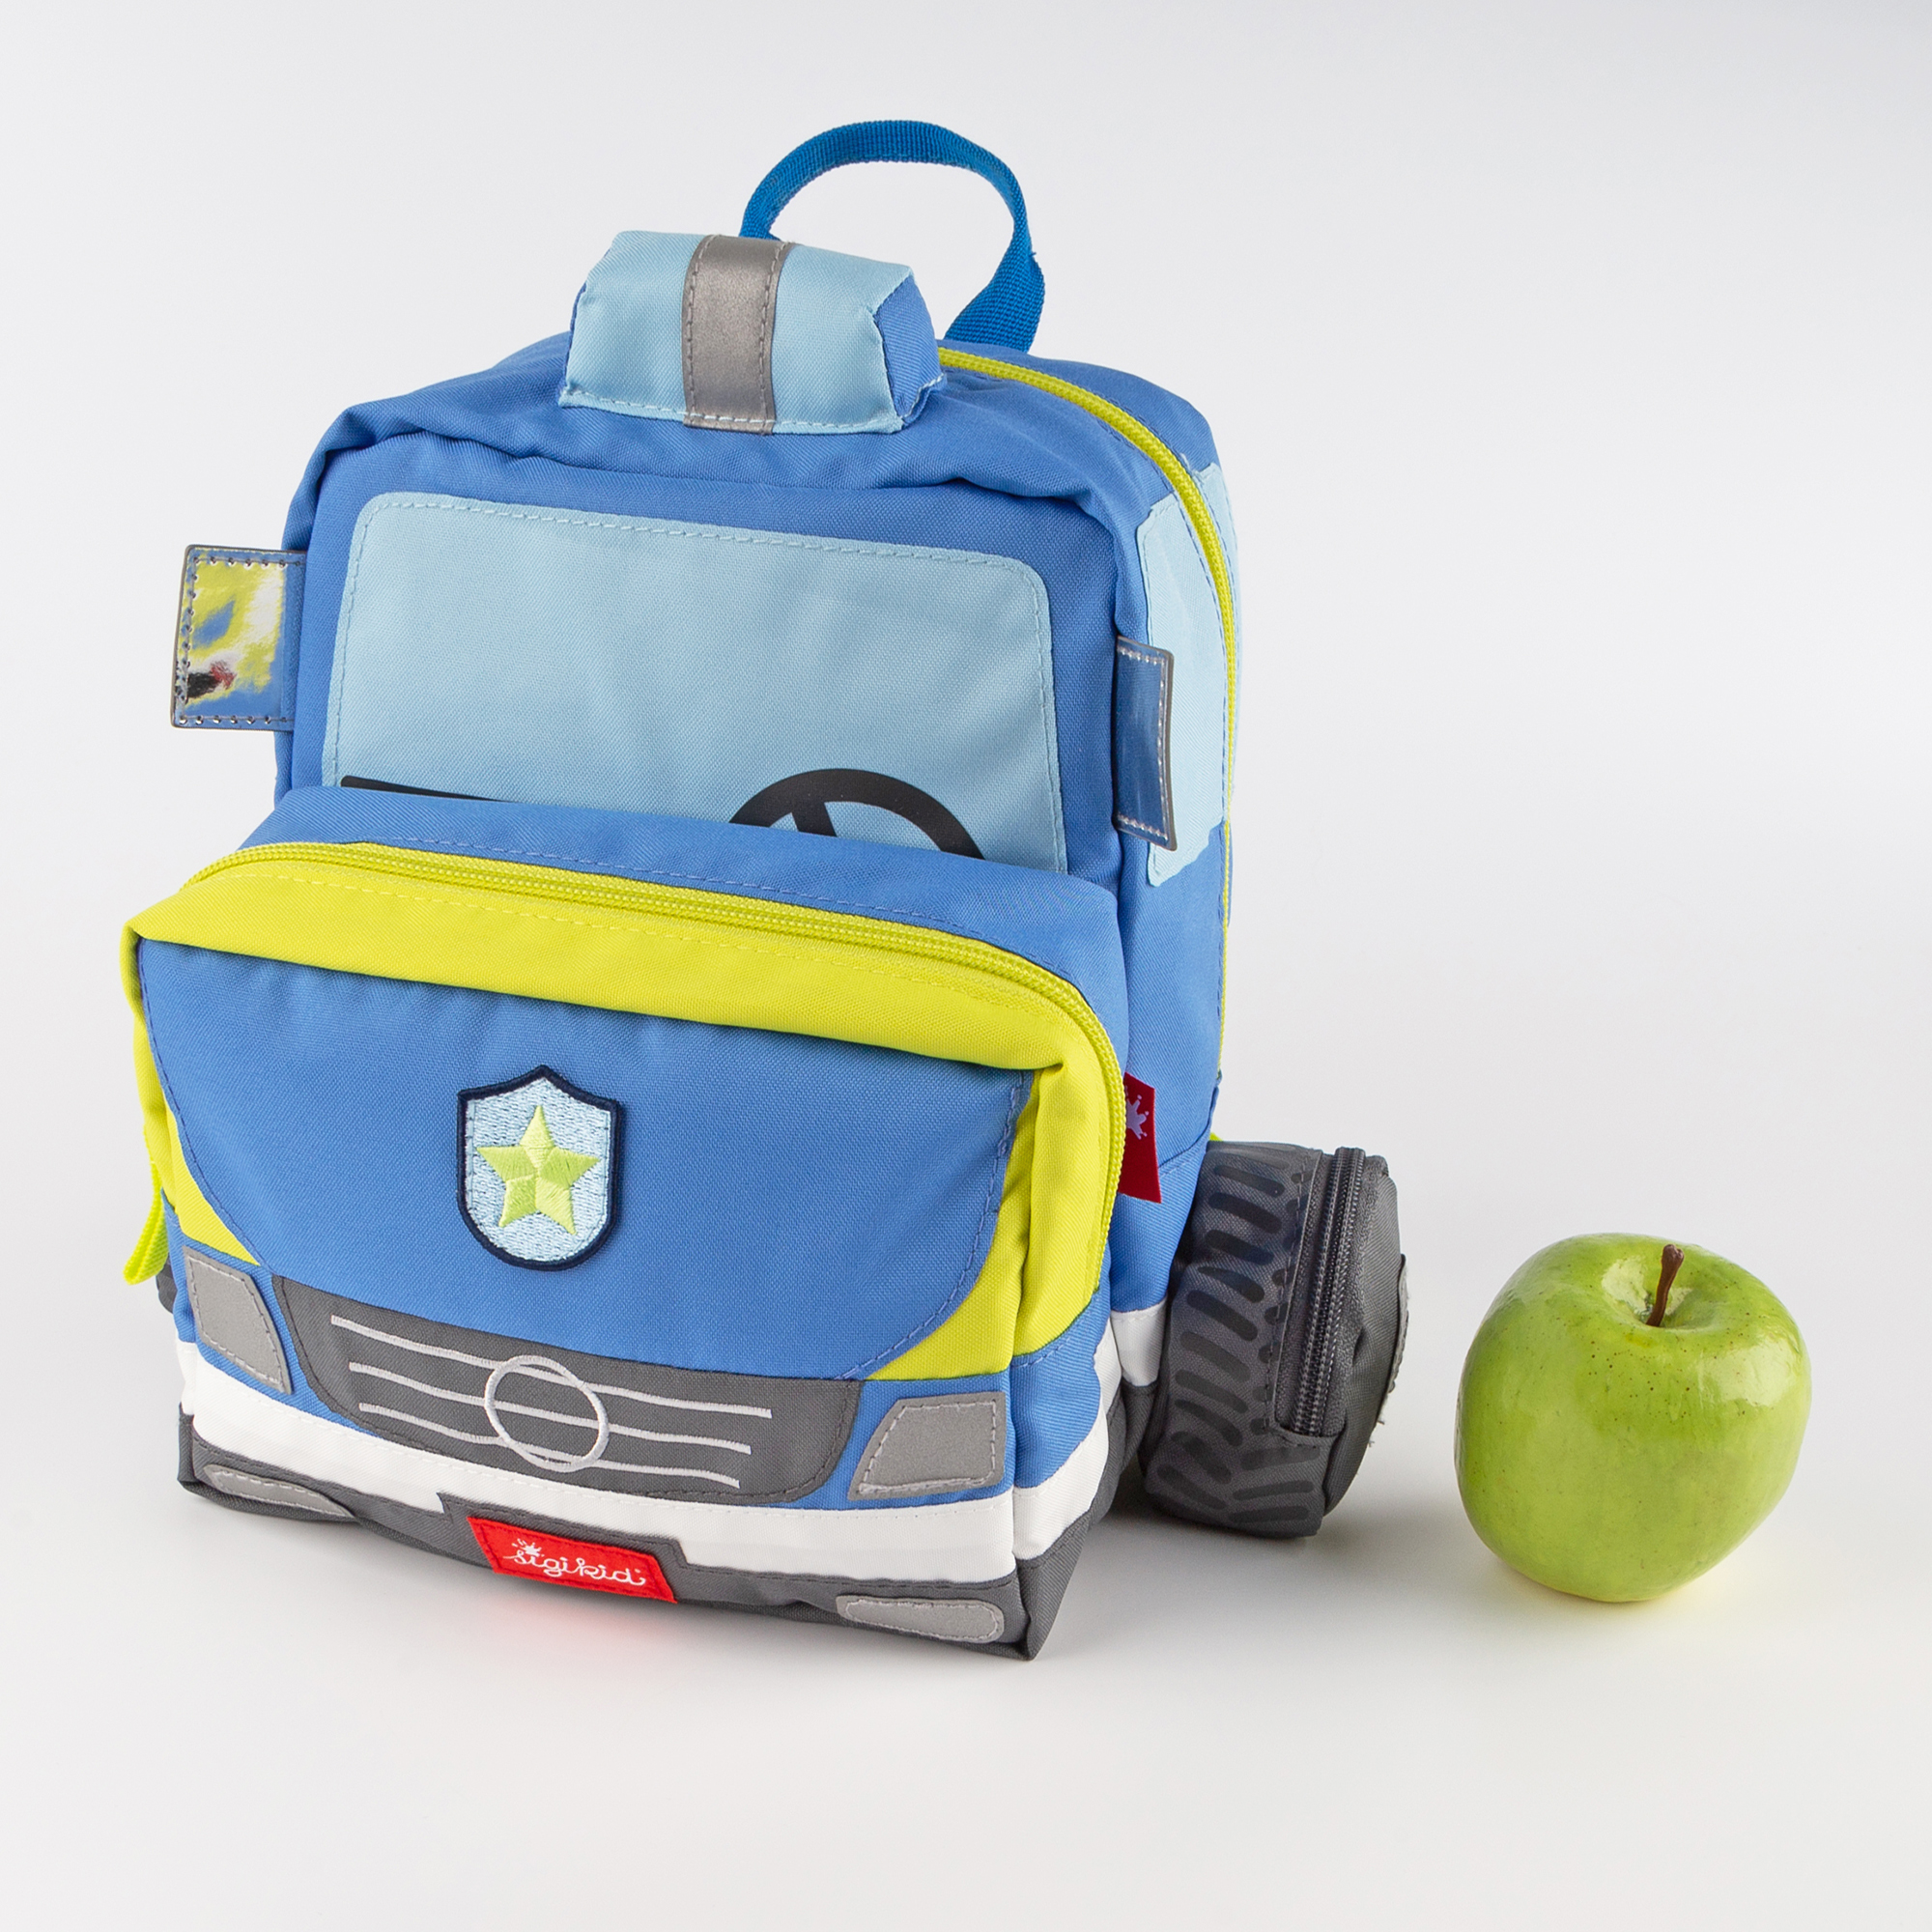 Children's backpack police car